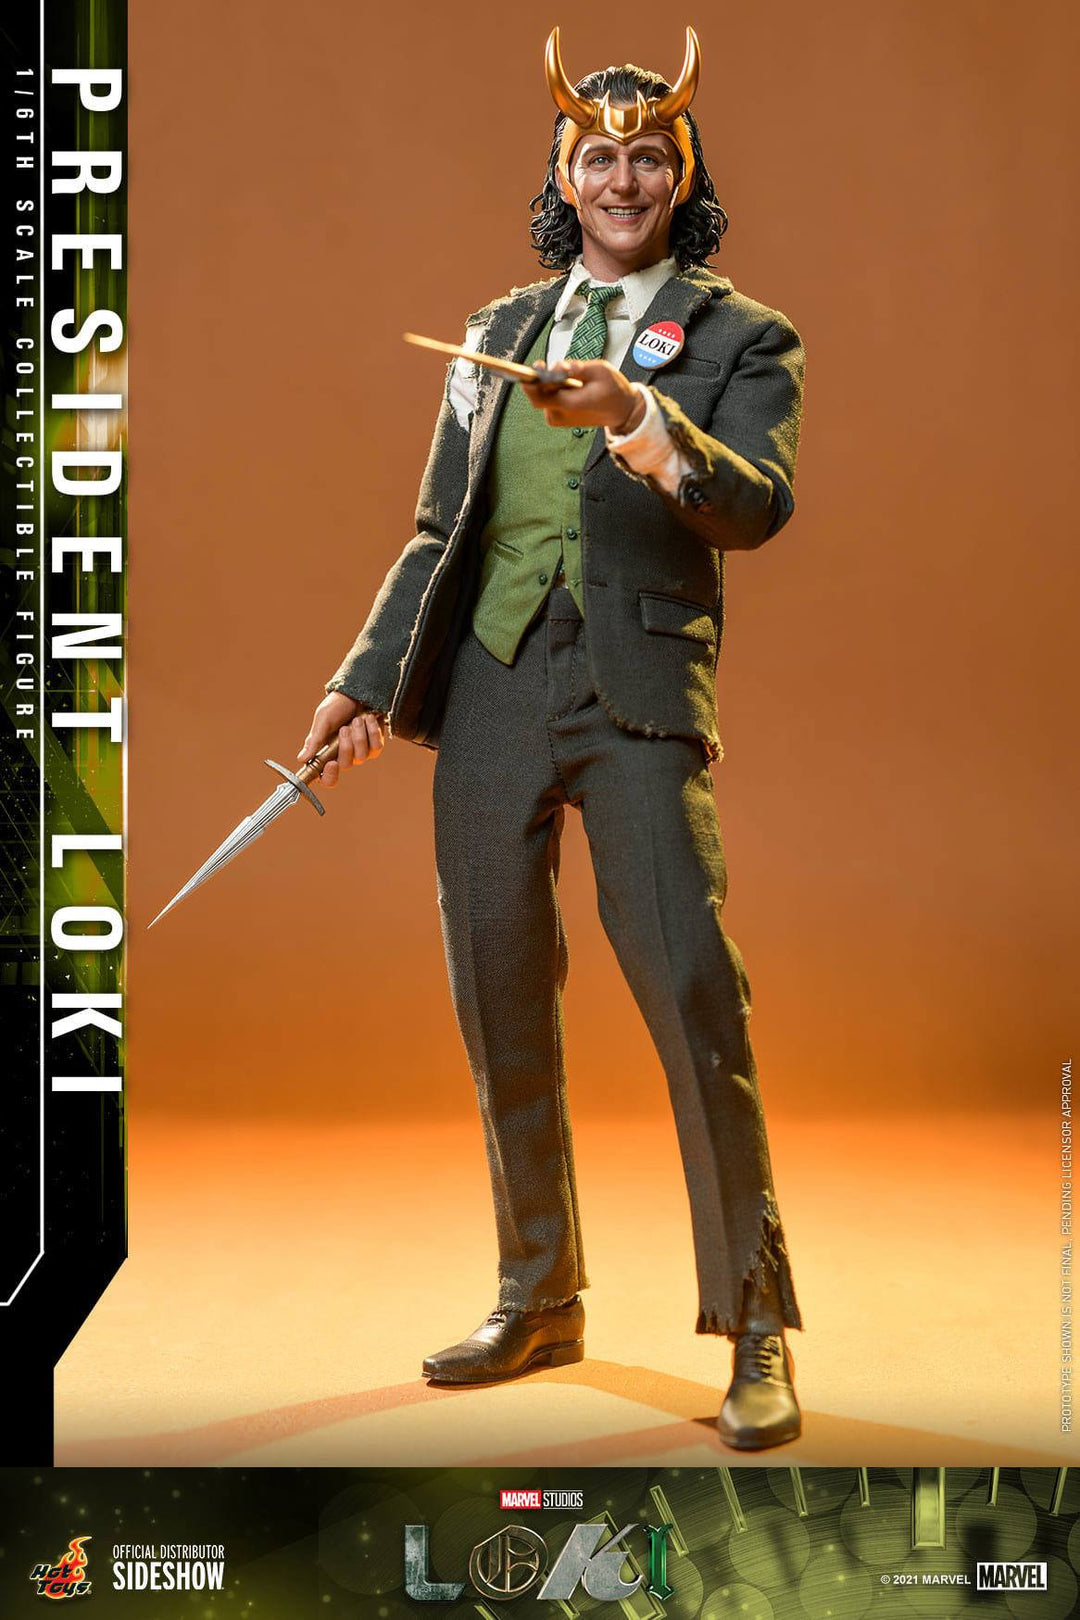 Hot Toys Loki President Loki 1/6 Scale Figure